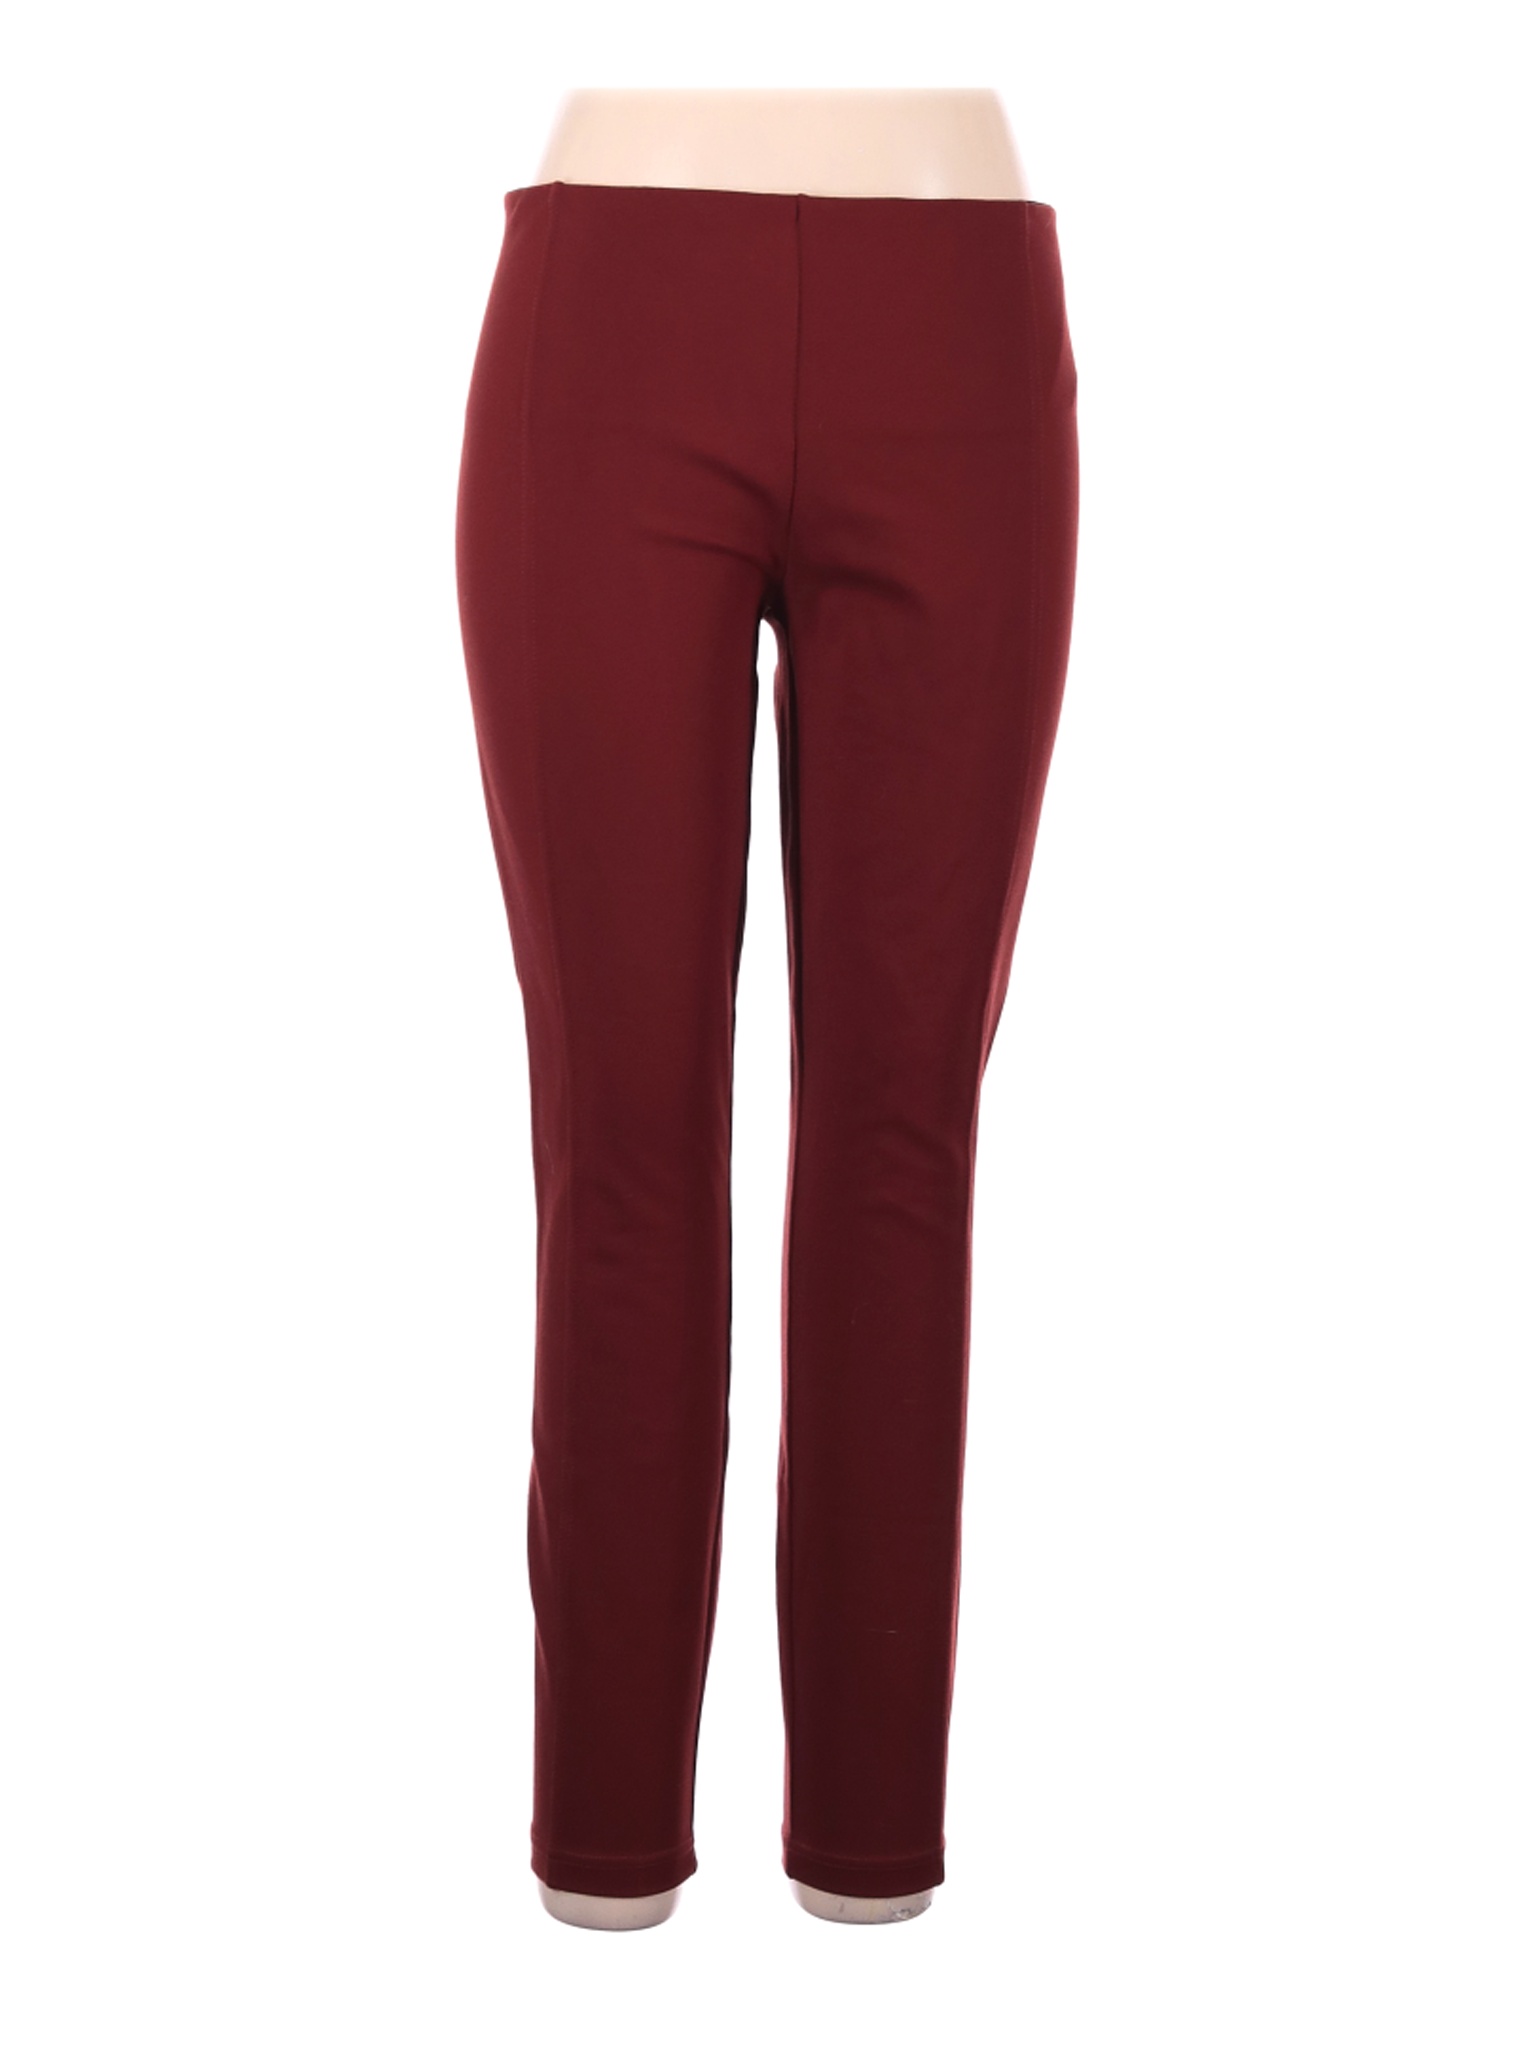 Rachel Zoe Women Brown Casual Pants 12 | eBay